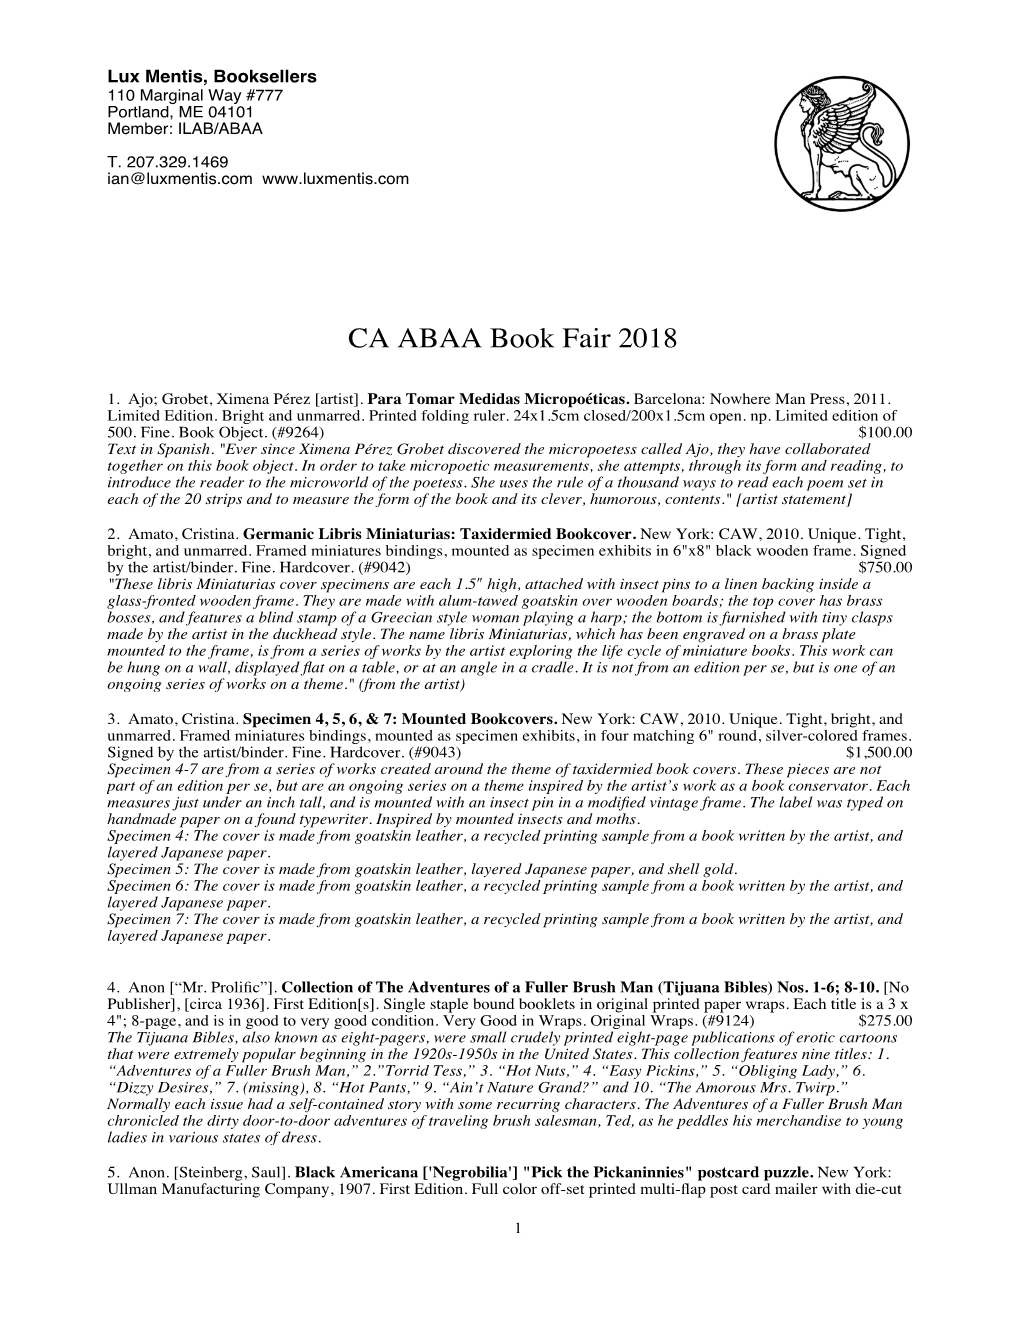 CA ABAA Book Fair 2018